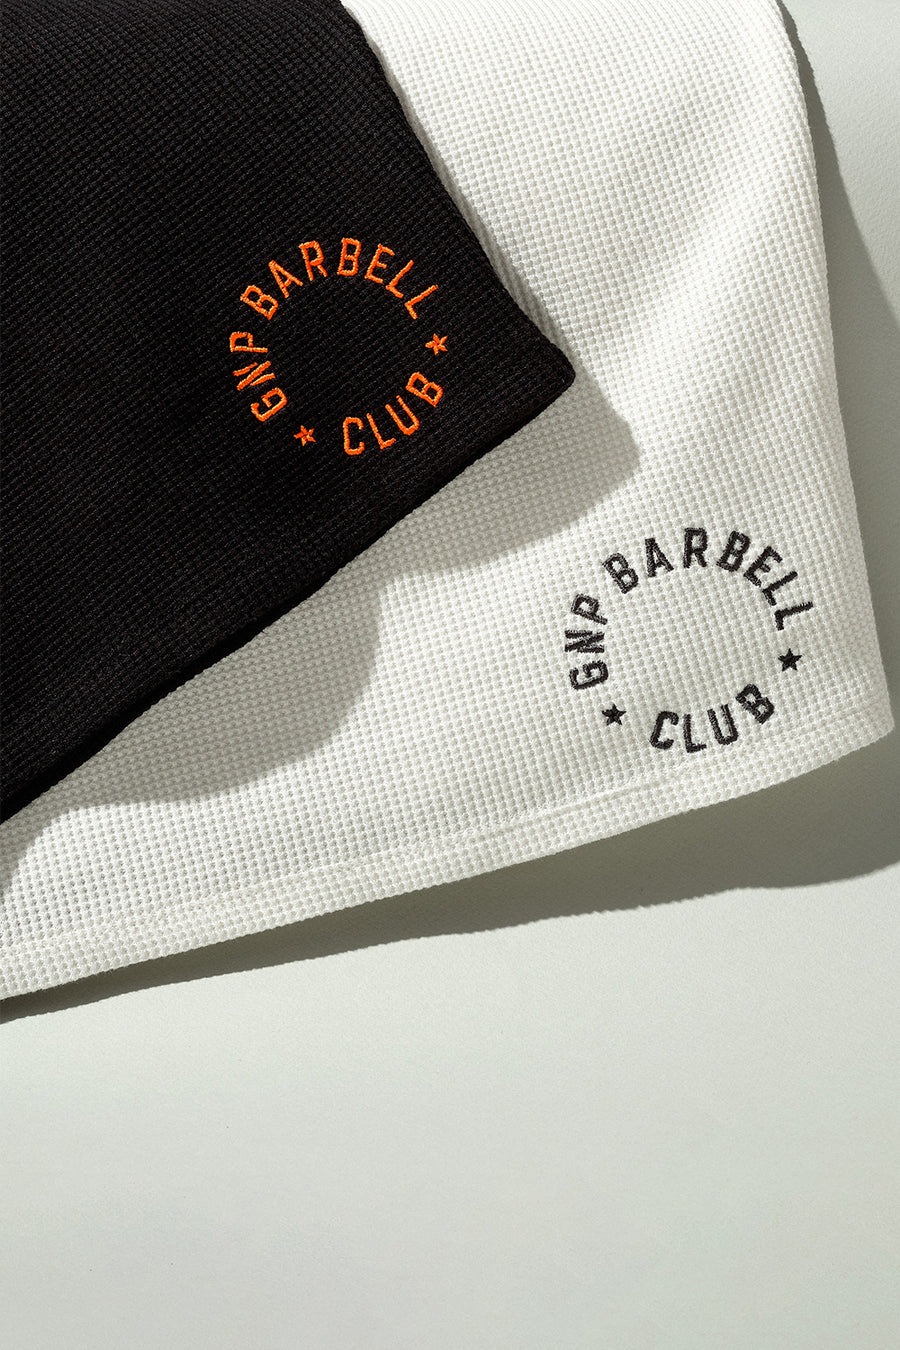 GNP Barbell Club Black Waffle Shorts